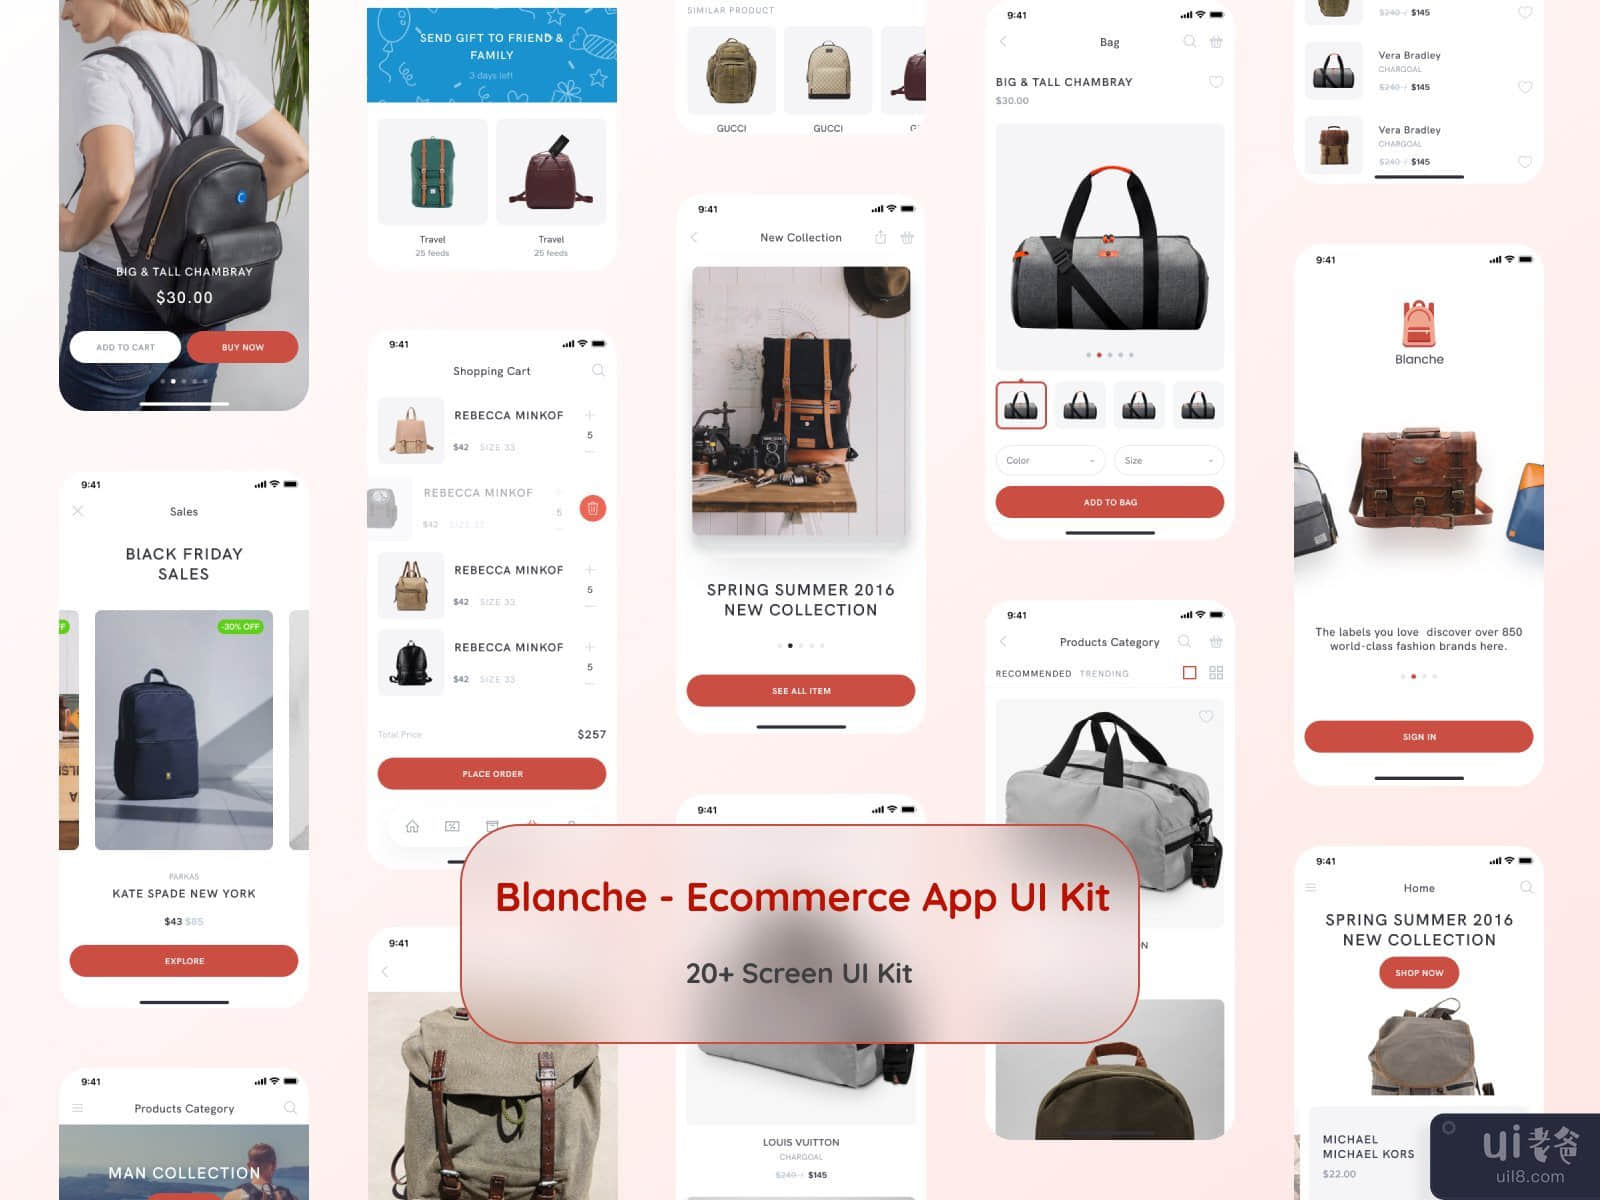 Blanche - Ecommerce App UI Kit